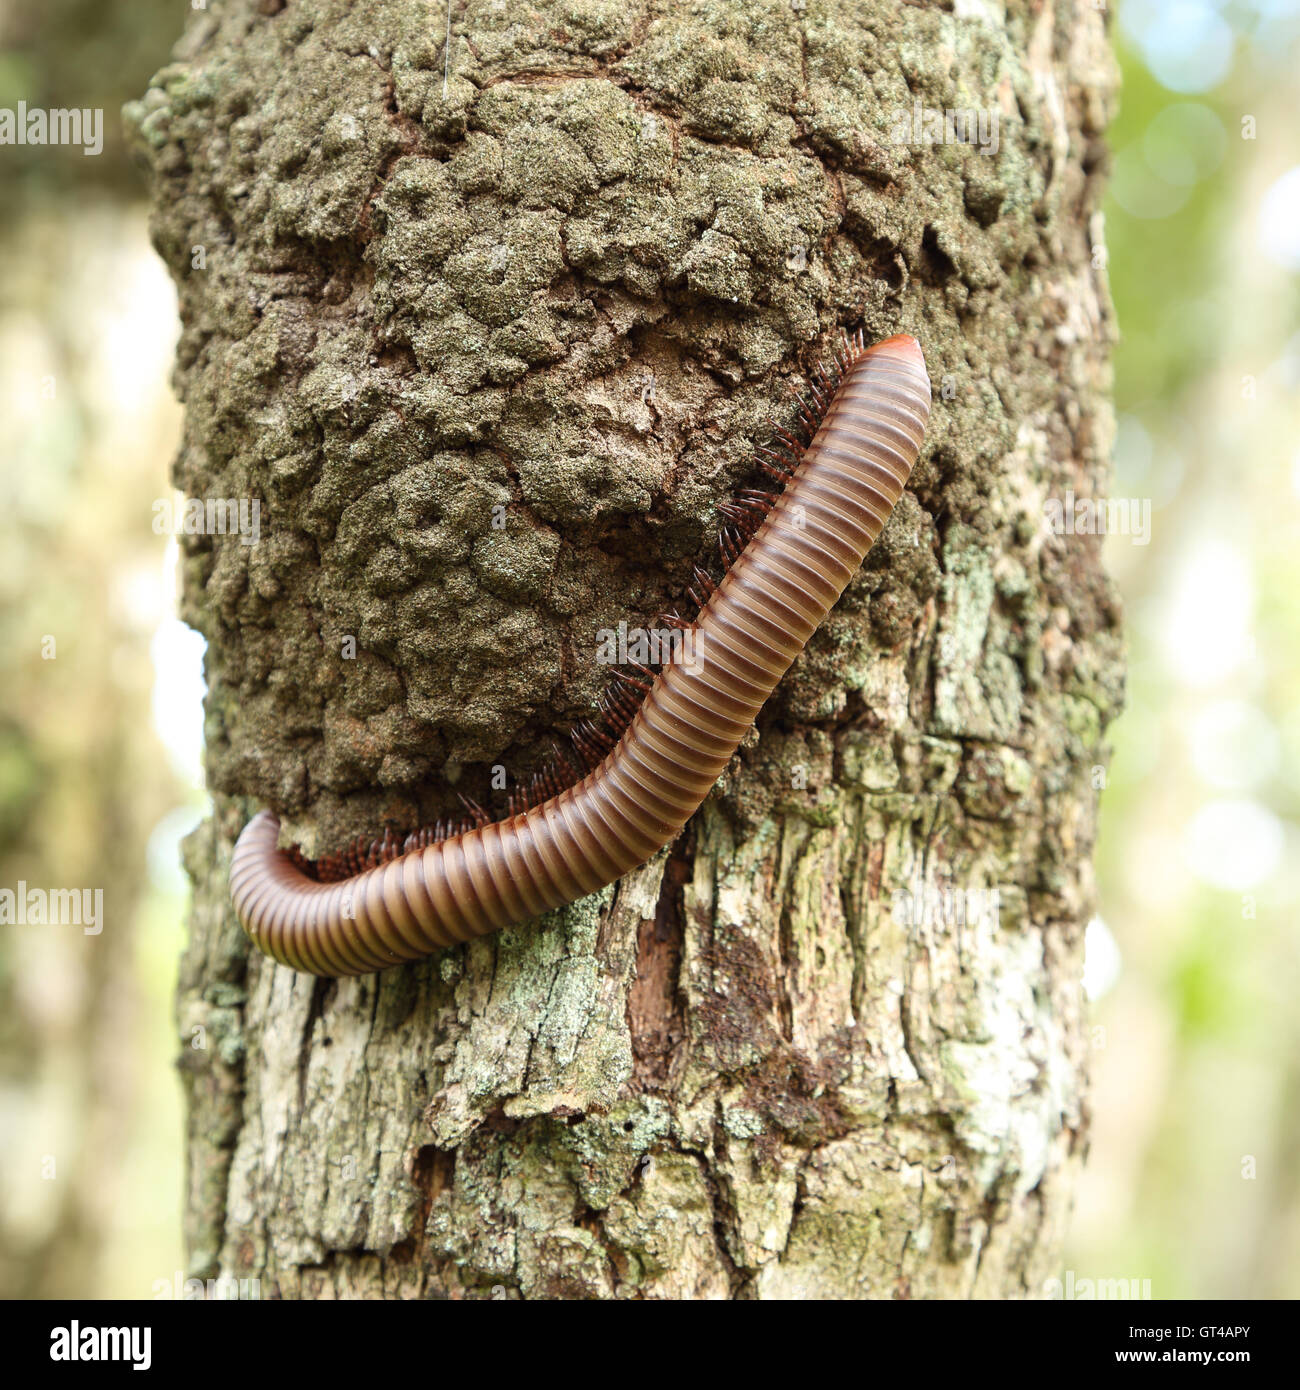 millipede climbing on tree Stock Photo